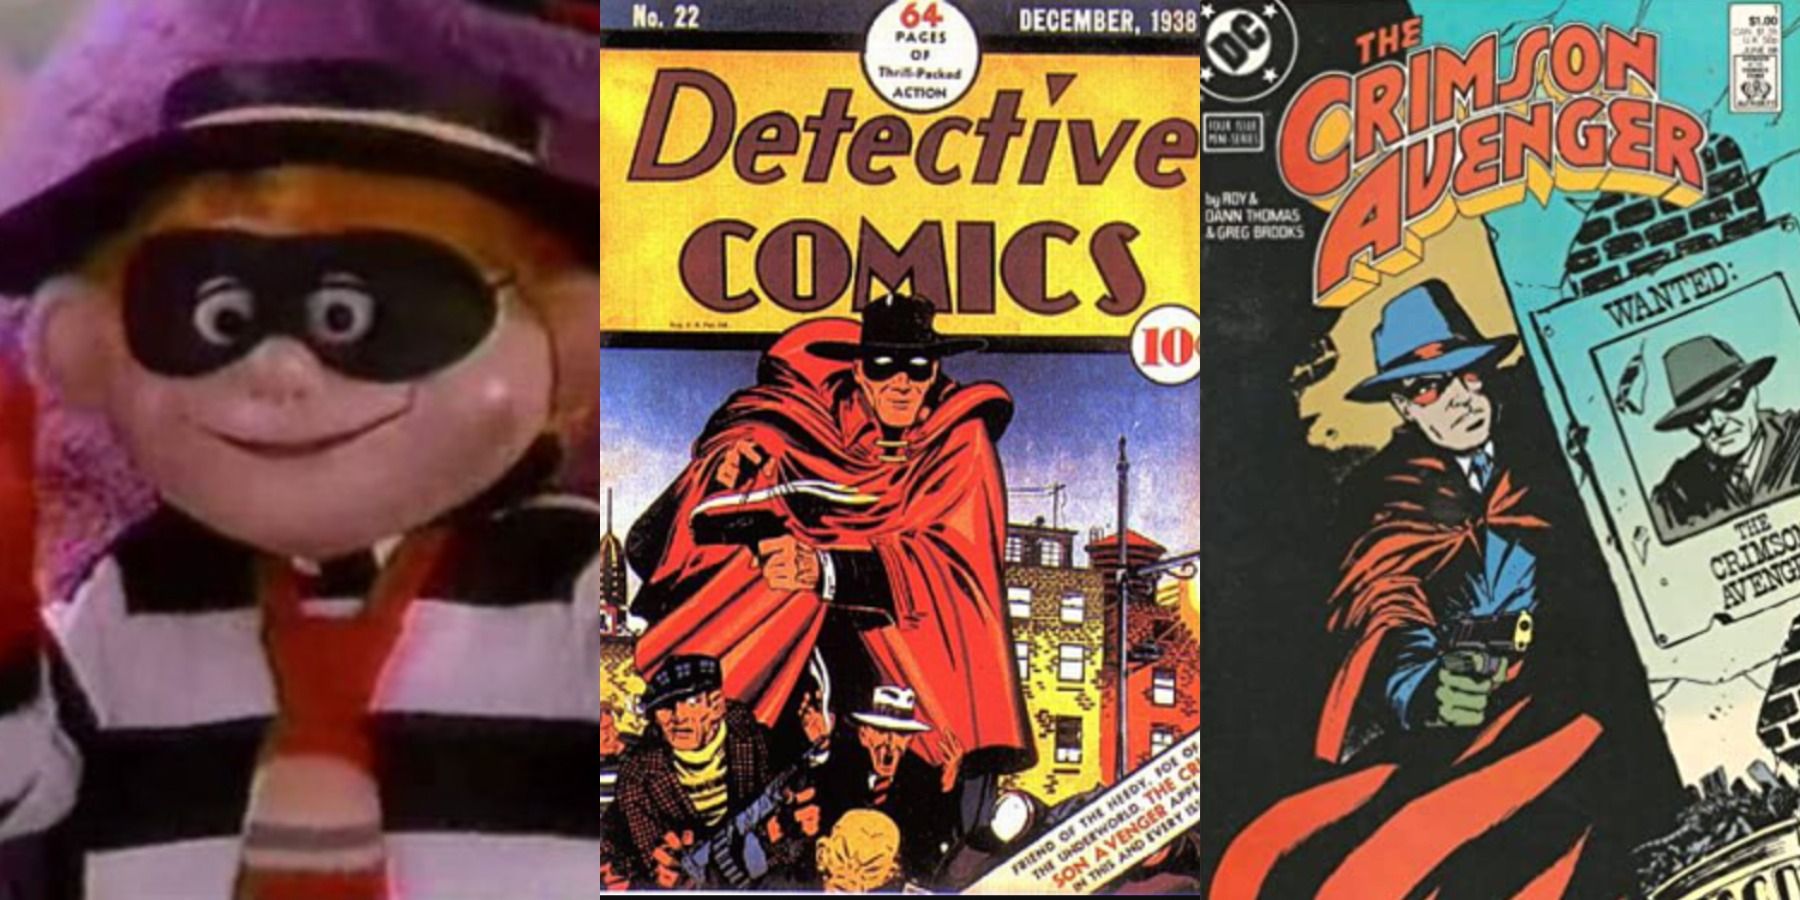 A split image features the Hamburglar, the original comic book appearance of the Crimson Avenger, and an adapted Crimson Avenger